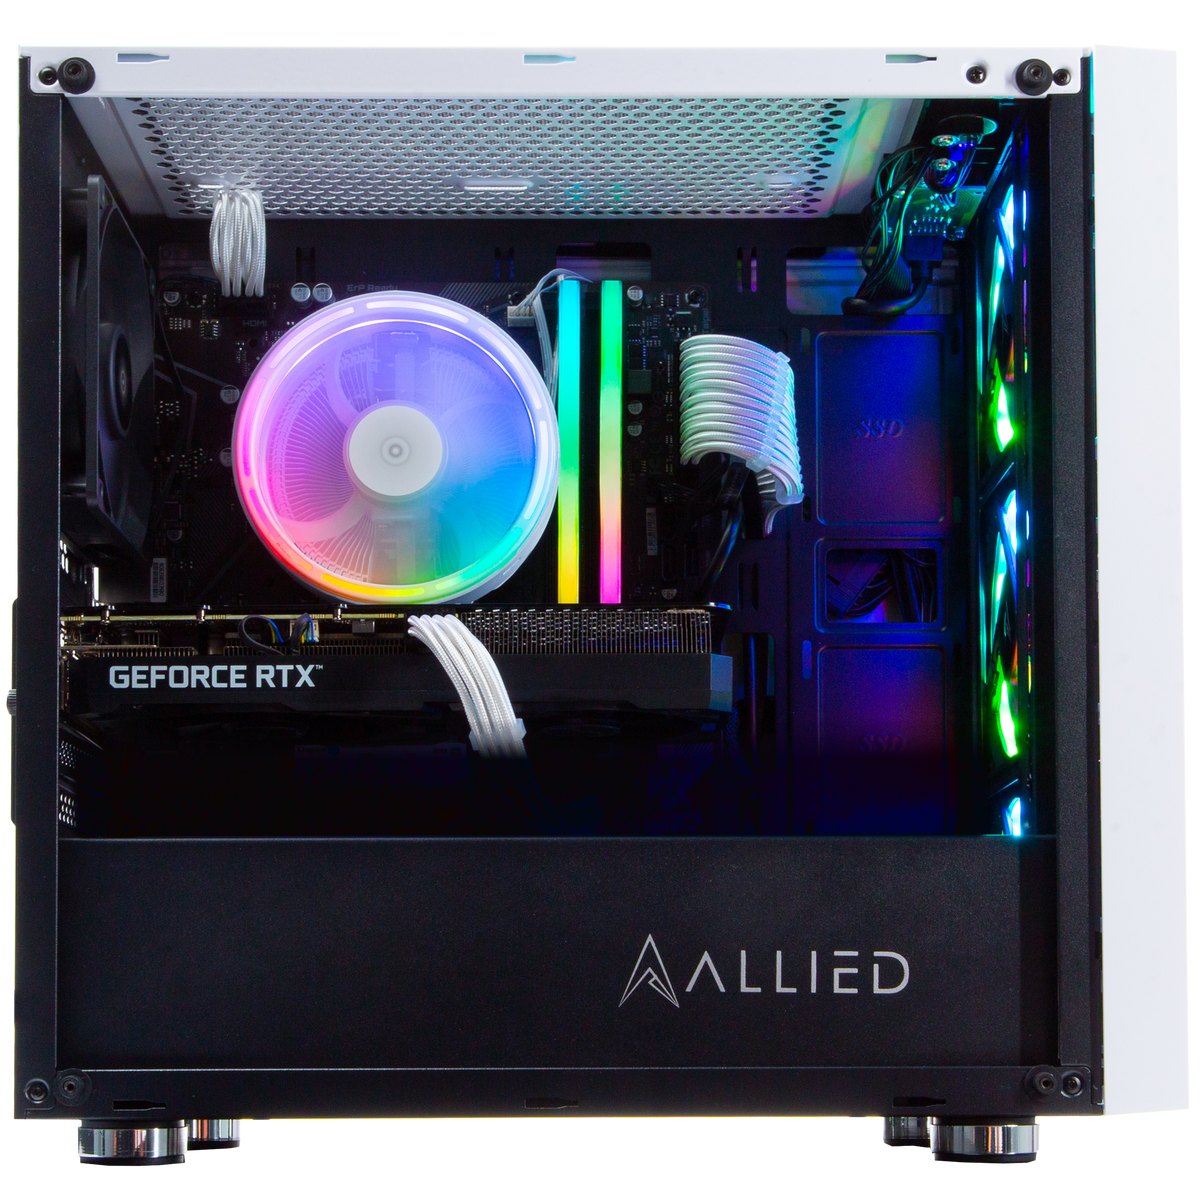 Allied Stinger-I: Intel Core i5-10400F | AMD RX 580 Gaming PC